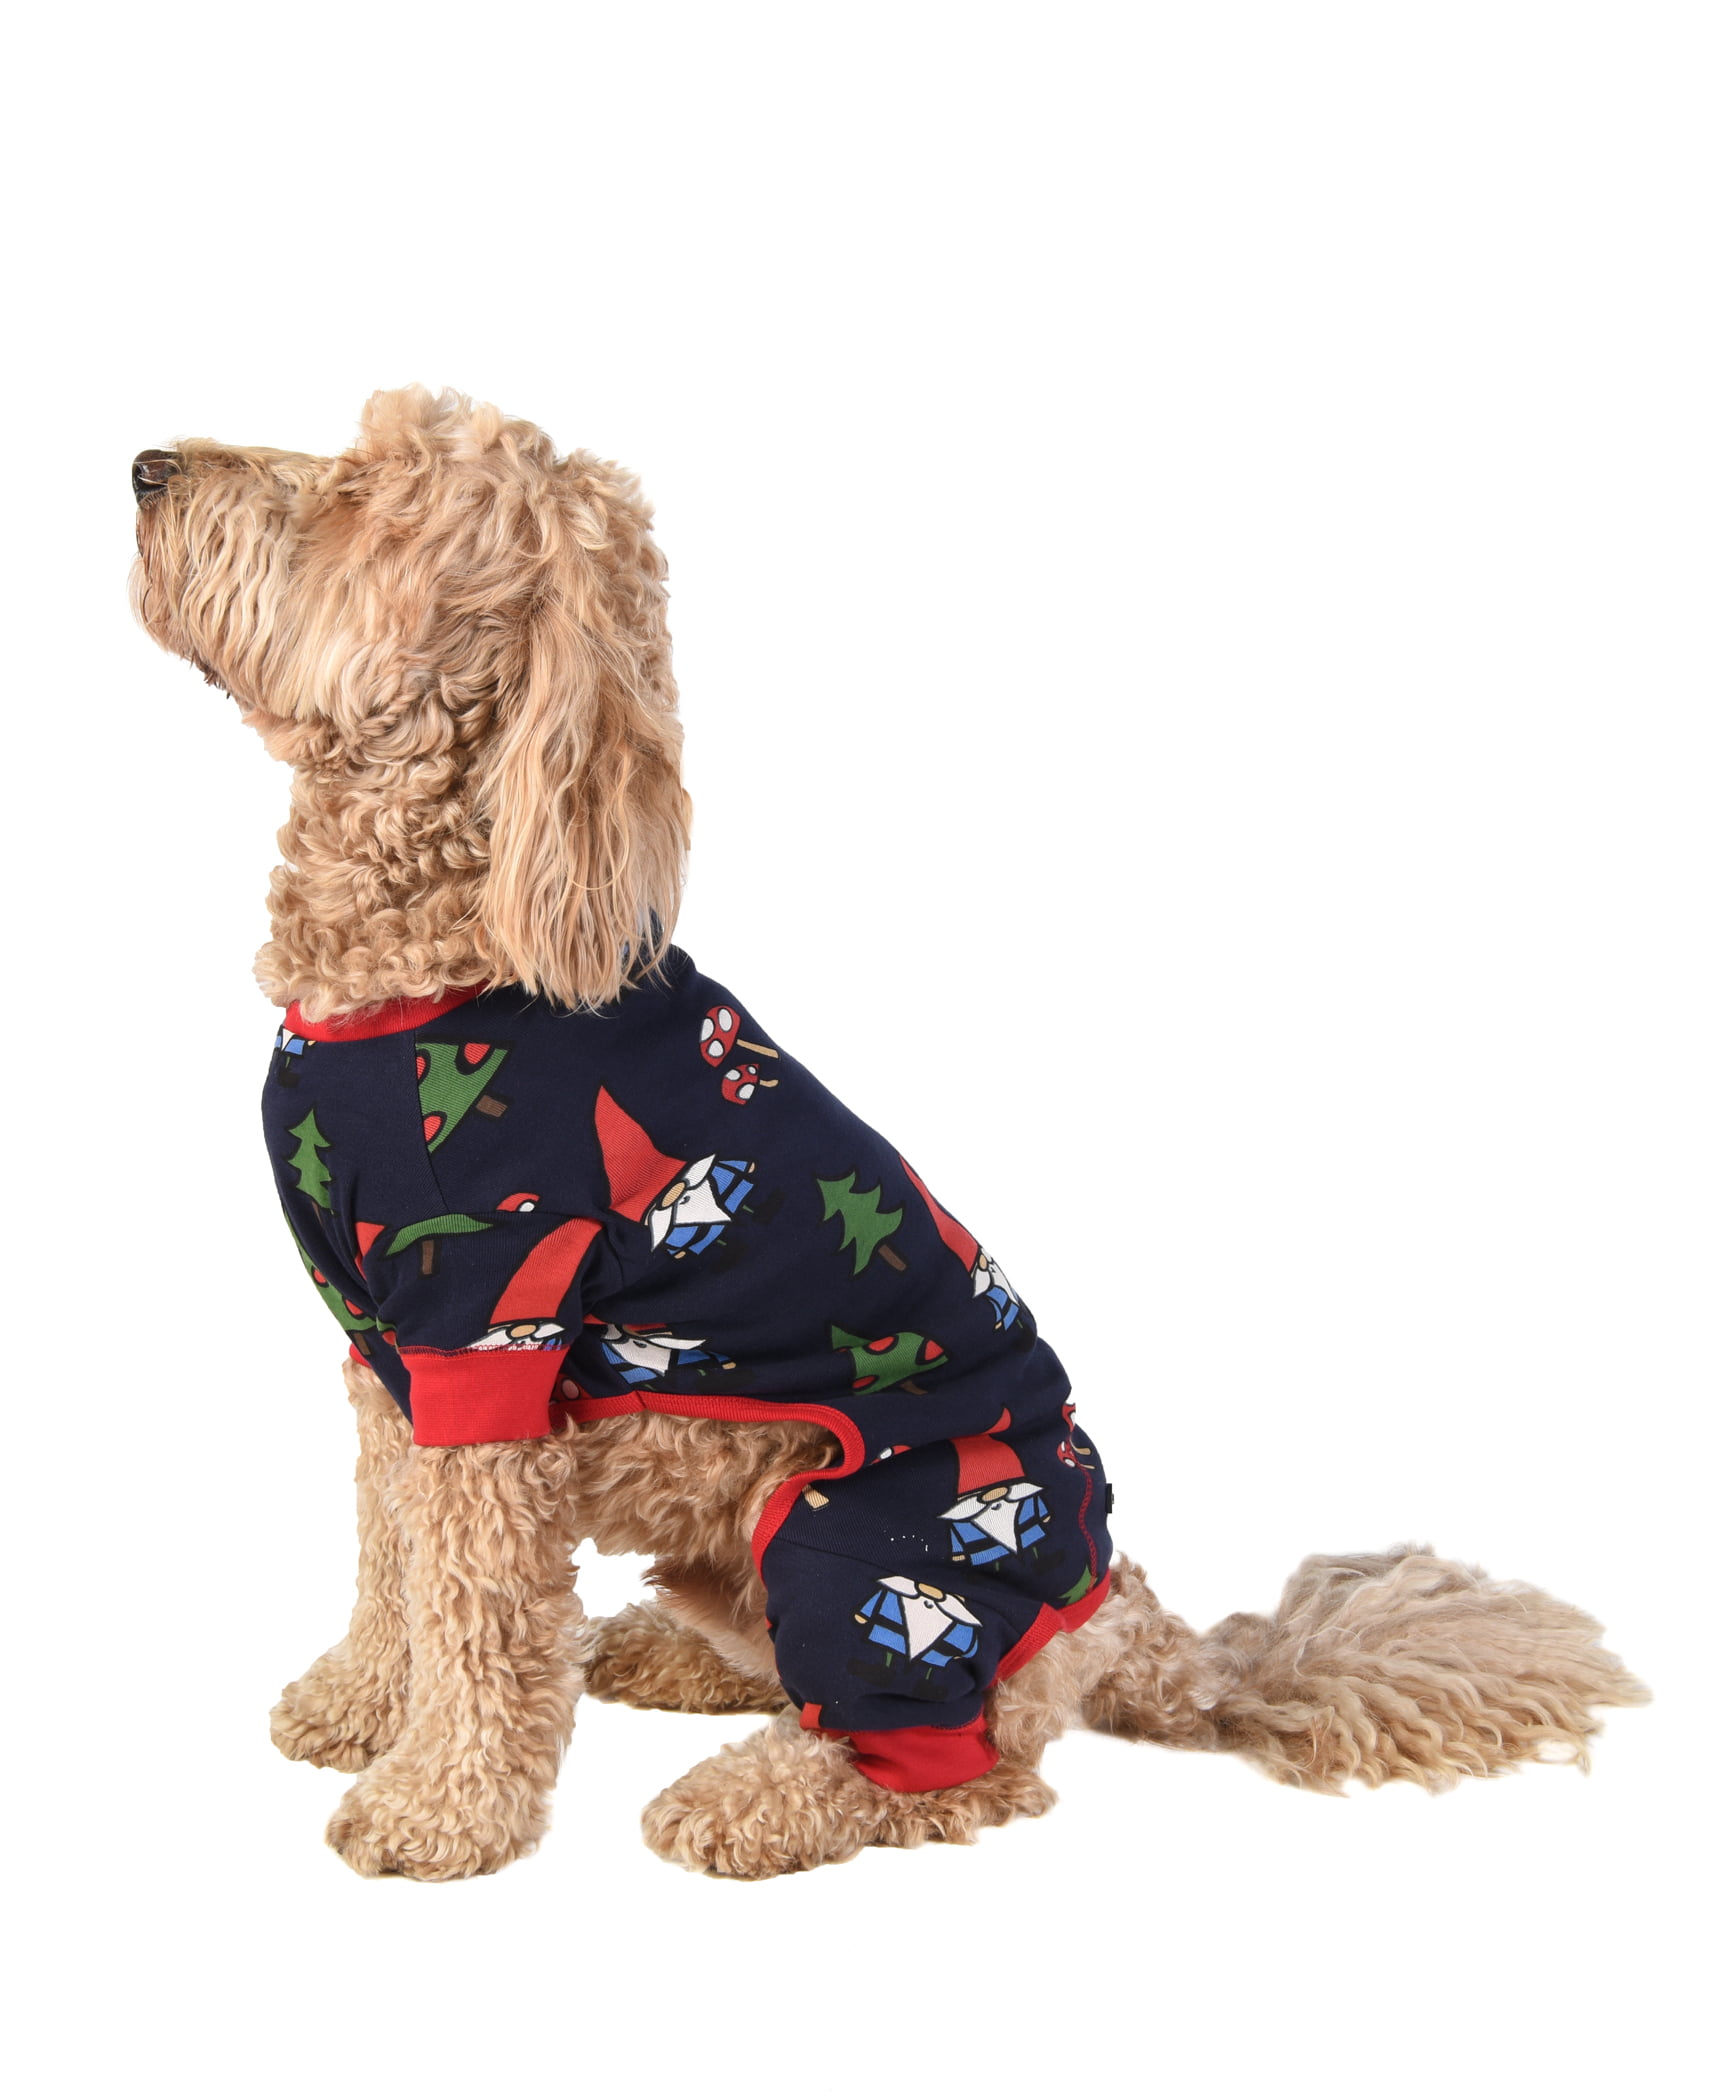 Matching Family Pajamas for Dogs LazyOne Flapjacks One-Piece Dog Sweater 